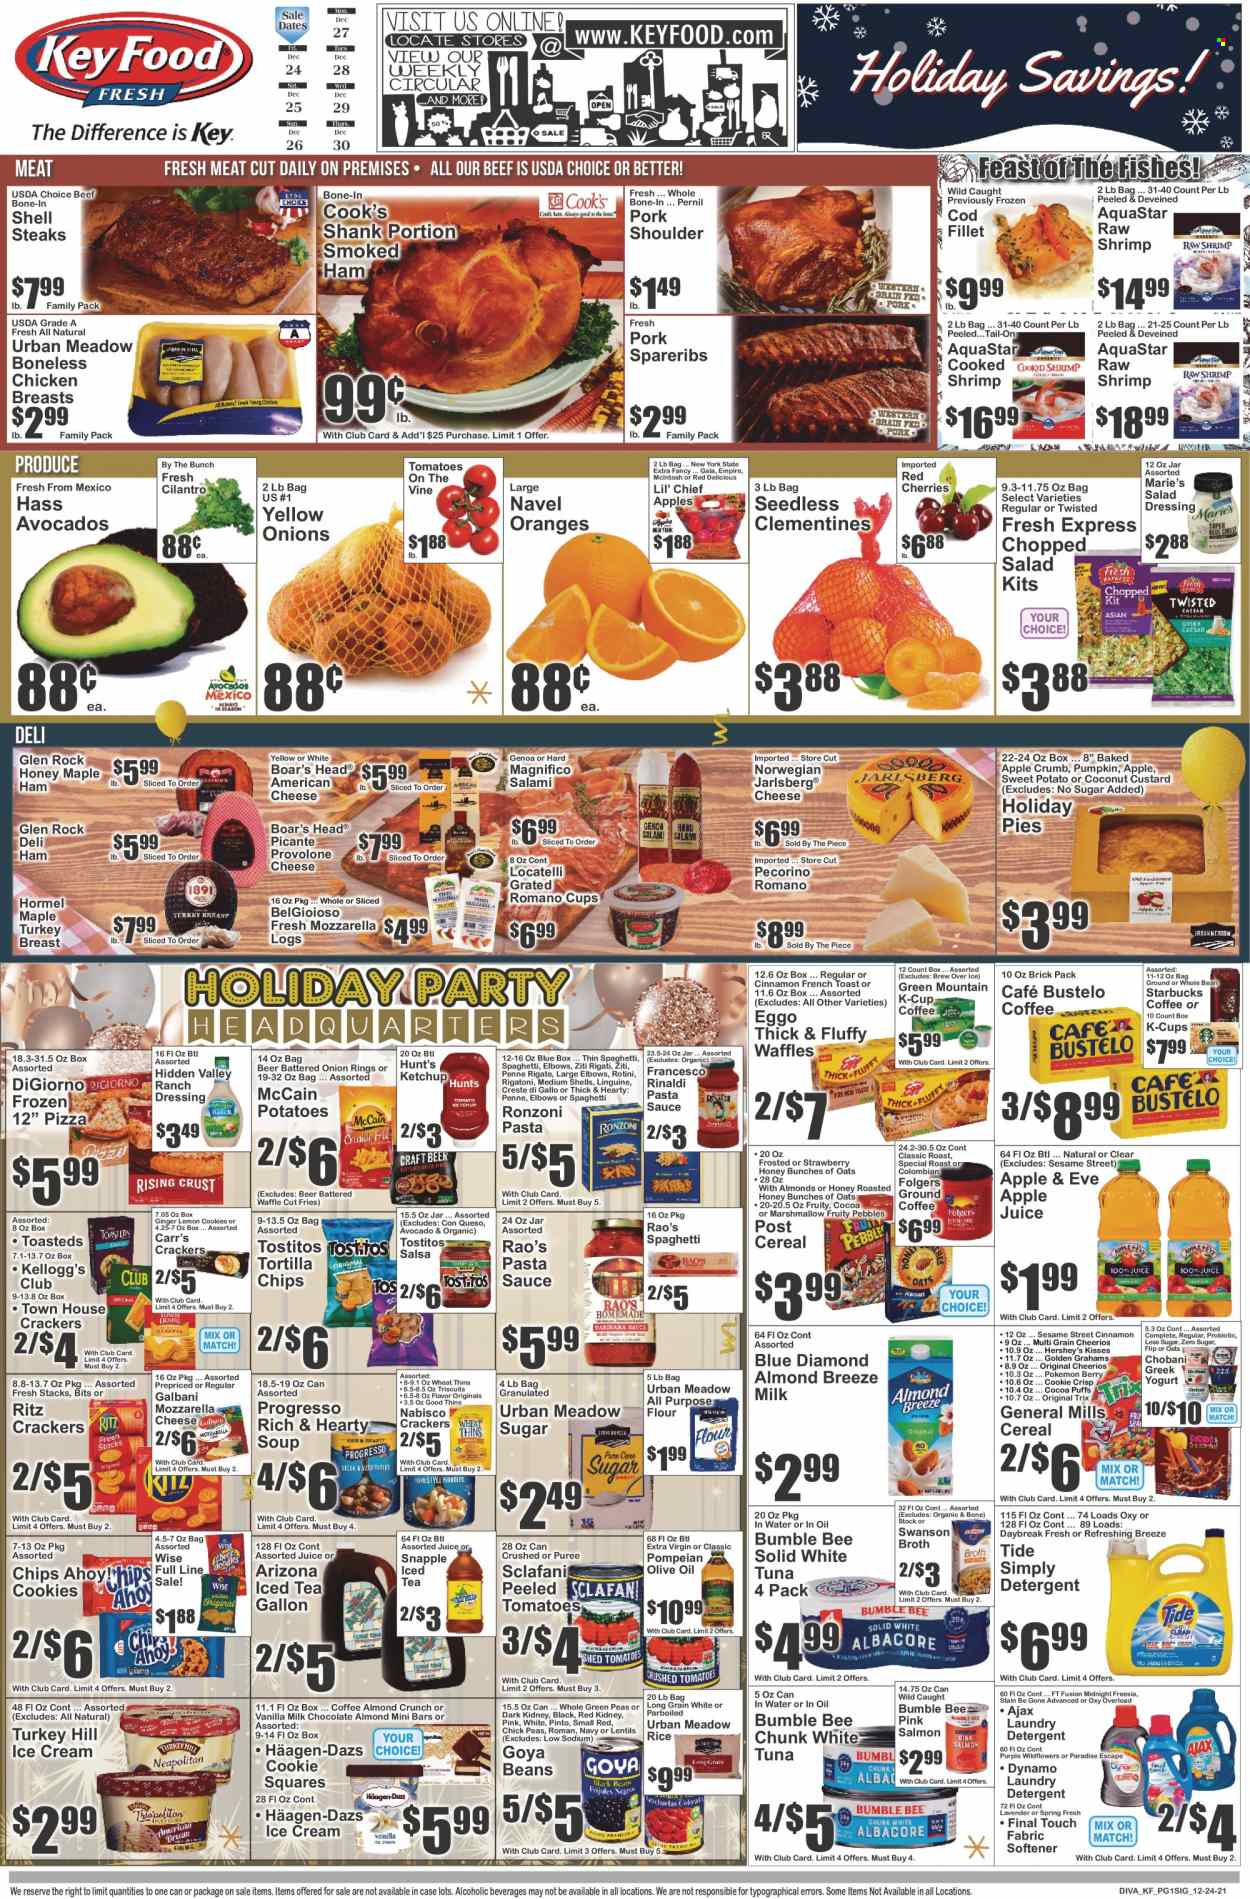 thumbnail - Key Food Flyer - 12/24/2021 - 12/30/2021 - Sales products - puffs, waffles, ginger, sweet potato, potatoes, avocado, Gala, Red Delicious apples, oranges, cod, salmon, tuna, shrimps, pizza, pasta sauce, onion rings, soup, Bumble Bee, sauce, Progresso, Hormel, salami, ham, smoked ham, Cook's, american cheese, Pecorino, Galbani, Provolone, custard, greek yoghurt, yoghurt, Chobani, Almond Breeze, ranch dressing, ice cream, Hershey's, Häagen-Dazs, McCain, potato fries, cookies, crackers, Kellogg's, Chips Ahoy!, RITZ, Sesame Street, tortilla chips, Thins, Tostitos, all purpose flour, broth, lentils, Goya, cereals, Cheerios, Trix, Fruity Pebbles, rice, penne, cilantro, cinnamon, salad dressing, ketchup, dressing, salsa, extra virgin olive oil, olive oil, Blue Diamond, apple juice, juice, ice tea, AriZona, Snapple, coffee, Starbucks, Folgers, coffee capsules, K-Cups, Green Mountain, beer, turkey breast, chicken breasts, steak, sirloin steak, pork meat, pork shoulder, pork spare ribs, detergent, Ajax, Tide, fabric softener, laundry detergent, beef bone, clementines, navel oranges. Page 1.